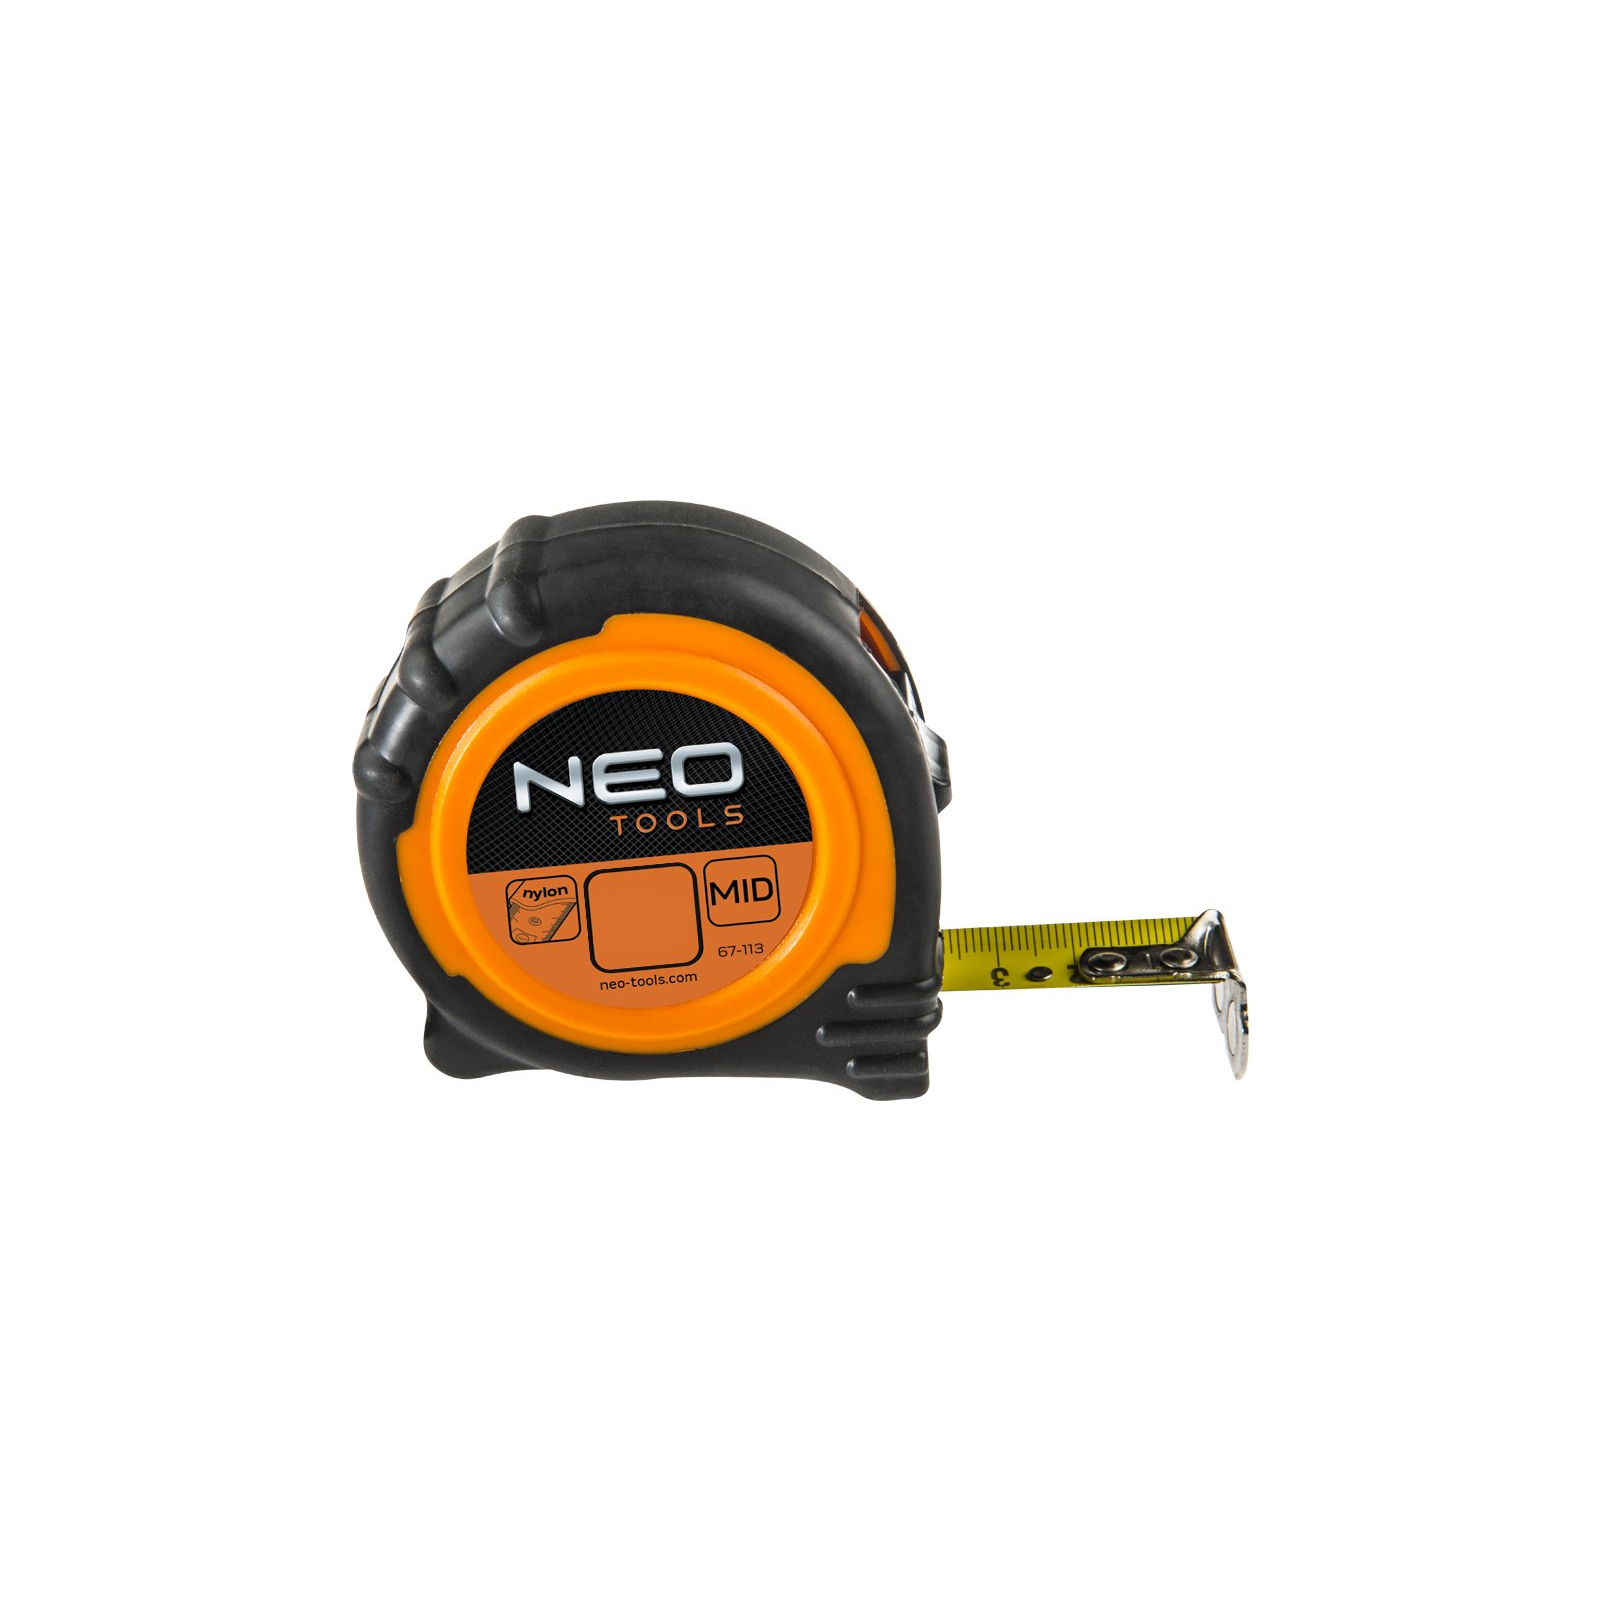 Рулетка Neo Tools стальная лента 3 м x 19 мм, магнит (67-113)